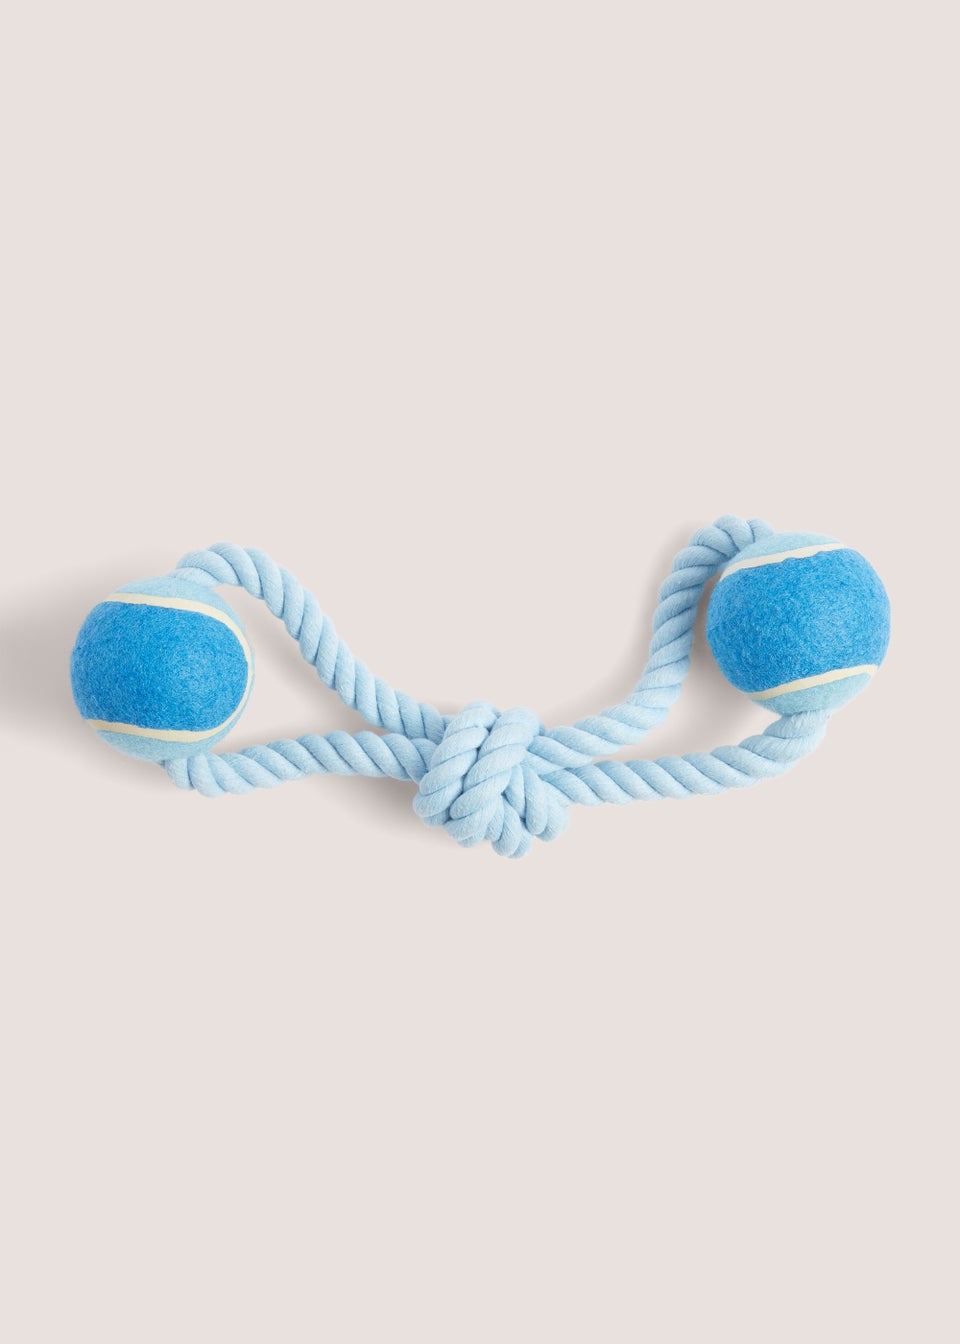 Tennis Ball Rope Pet Toy